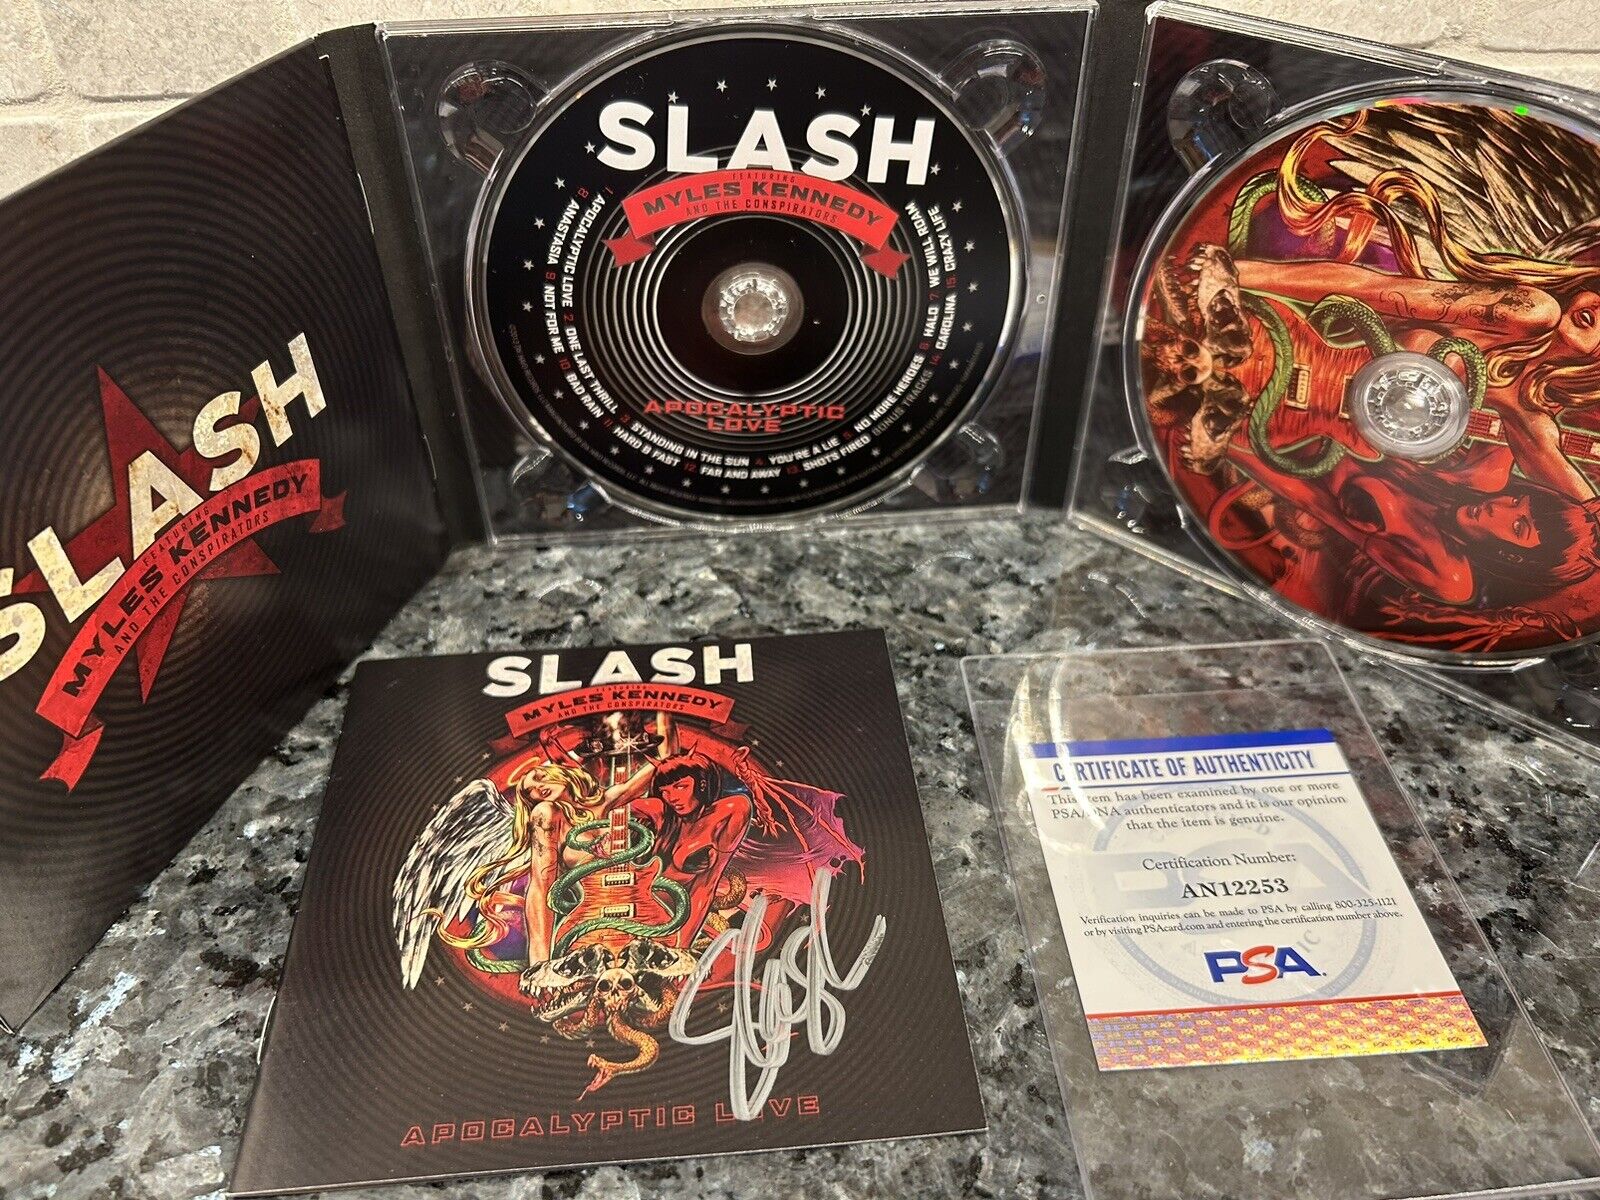 Slash Myles Kennedy Conspirators- Apocalyptic Love cd Signed Autographed PSA COA